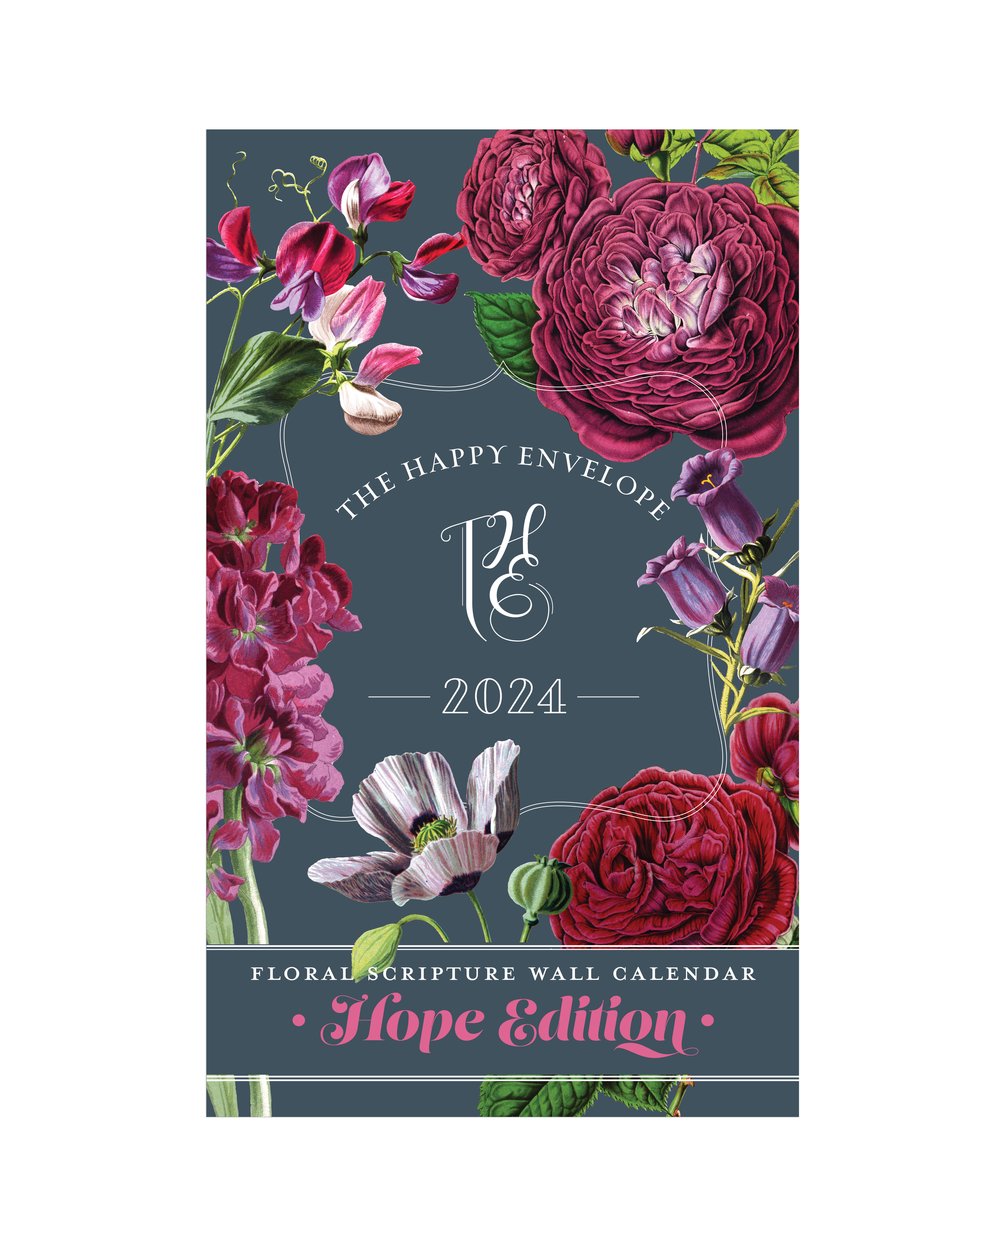 2024 Floral Scripture Calendar — The Happy Envelope